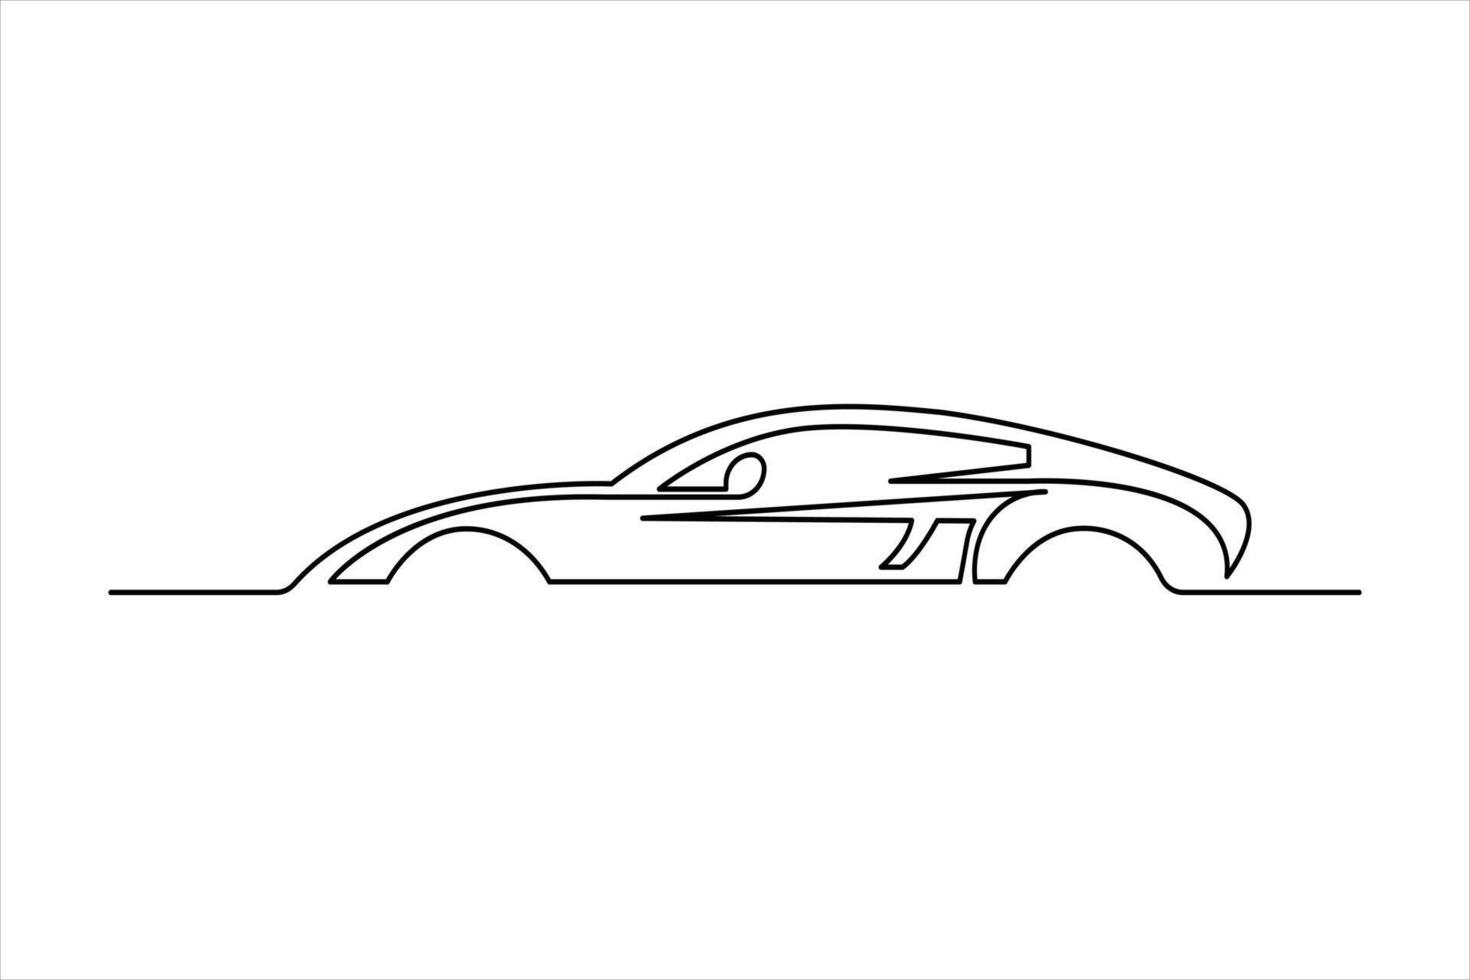 bil kontinuerlig ett linje teckning. fordon, vektor illustration minimalism design.